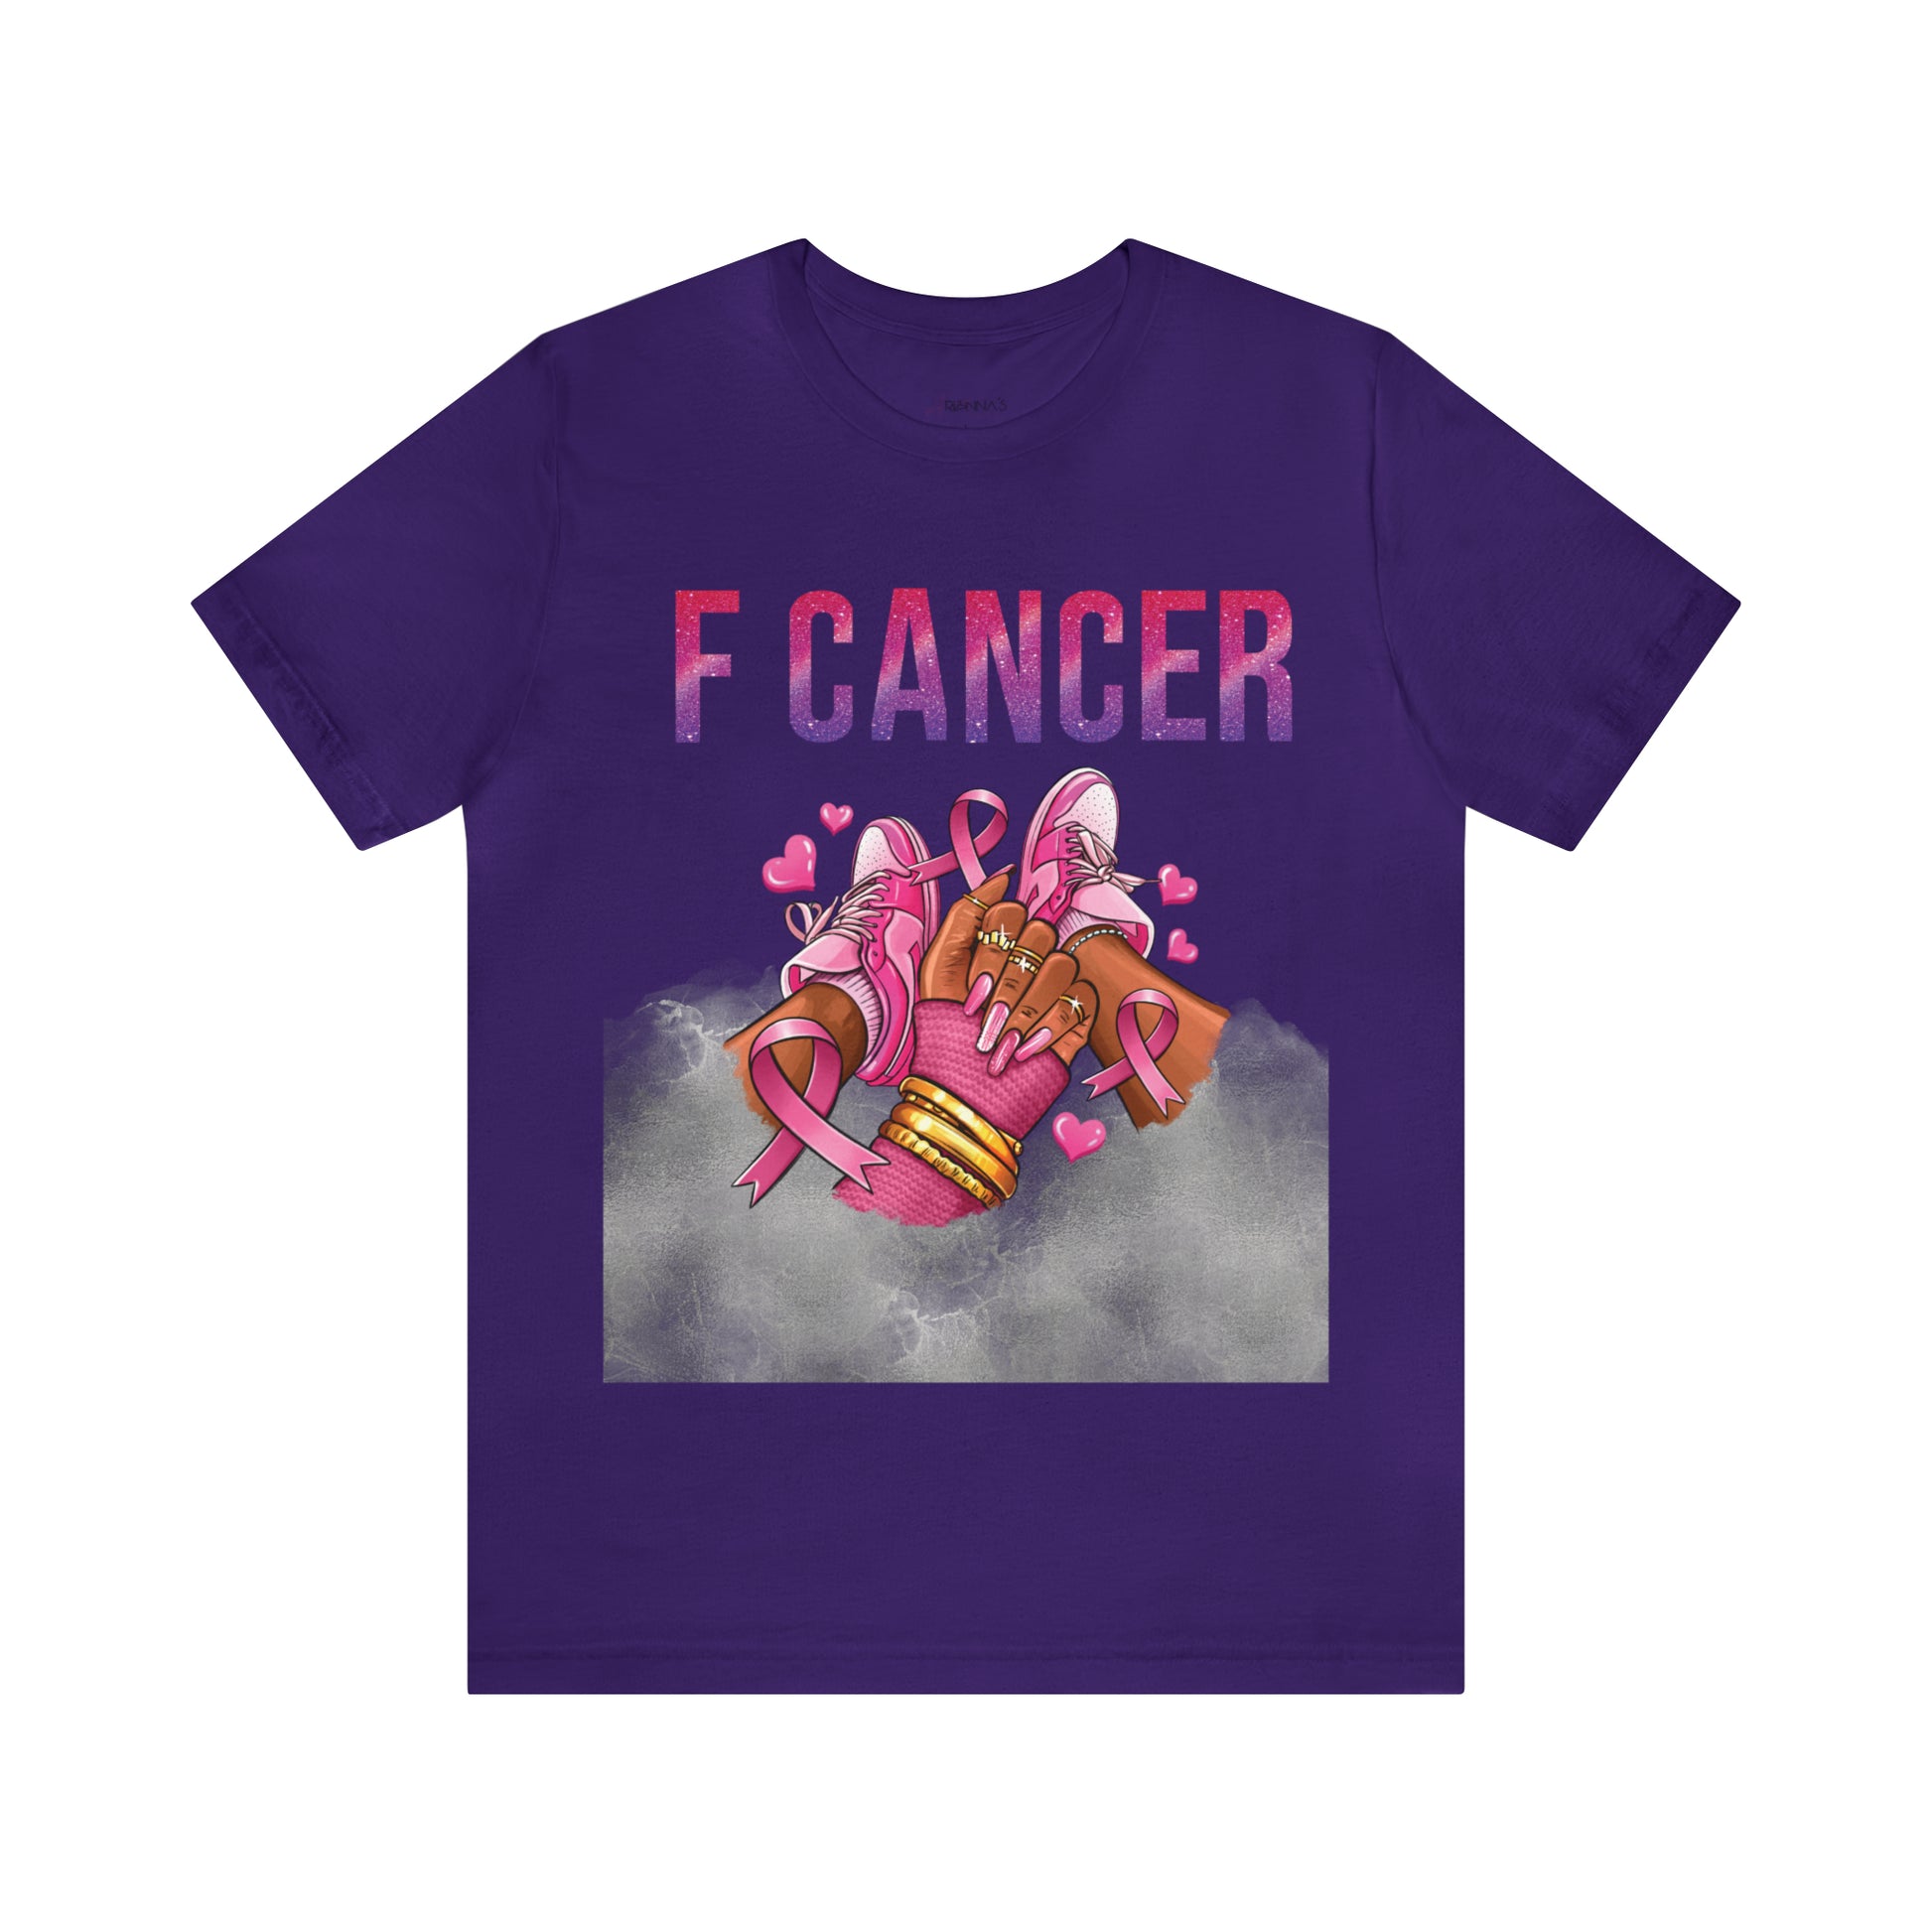 F Cancer Jersey Short Sleeve Tee - Arianna's Kloset